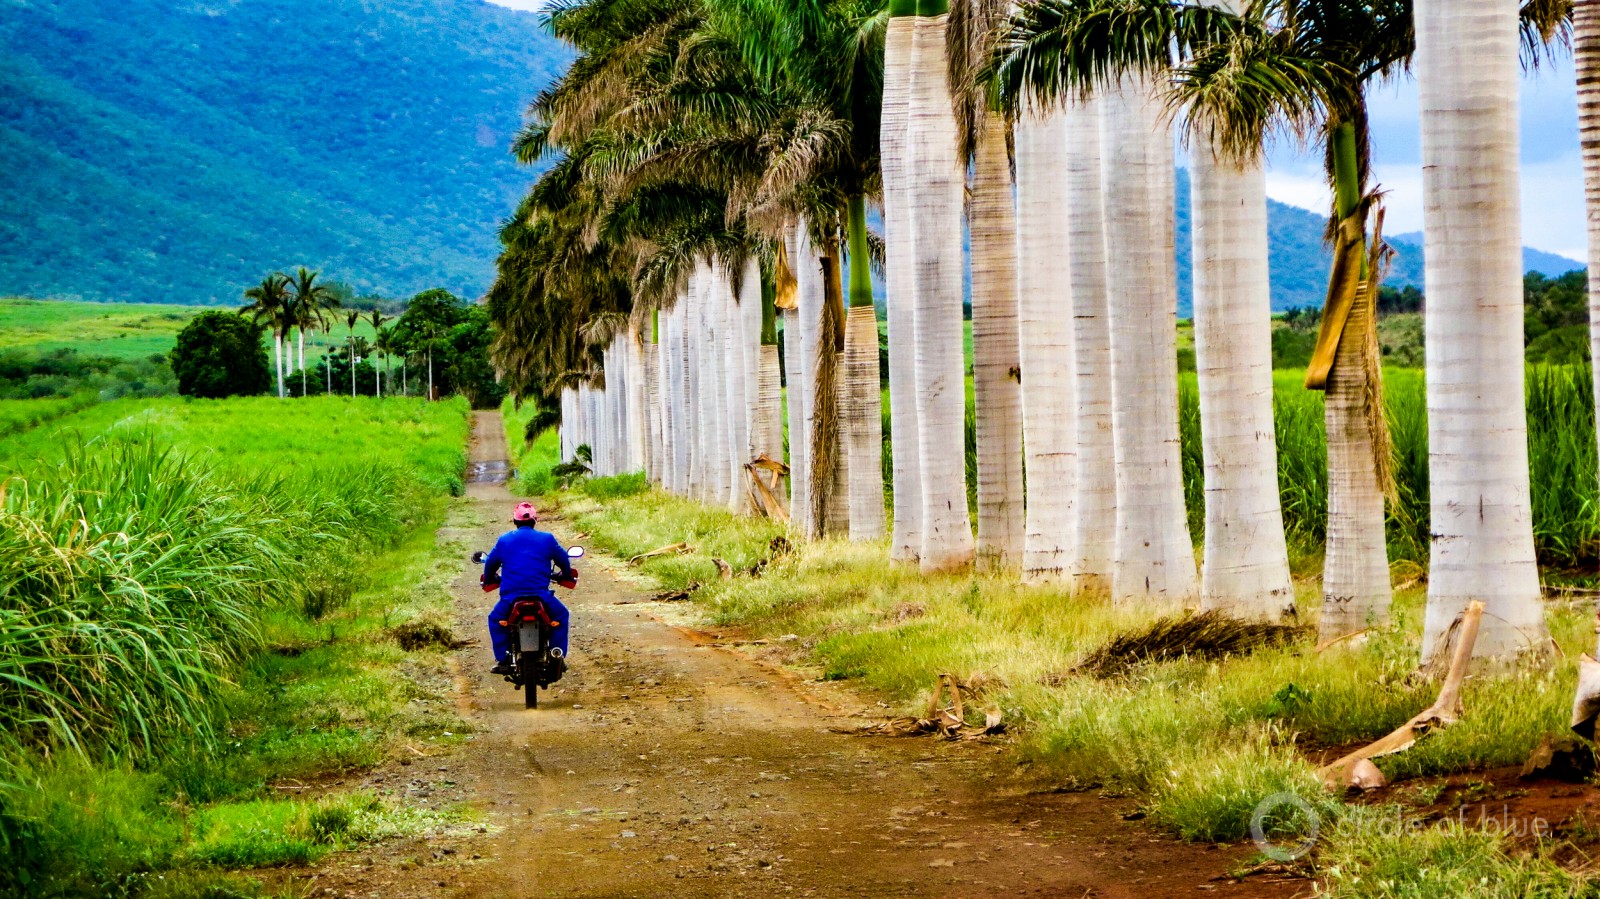 Royal palms line a farm road between sugar cane fields in northern Kwazulu-Natal province.